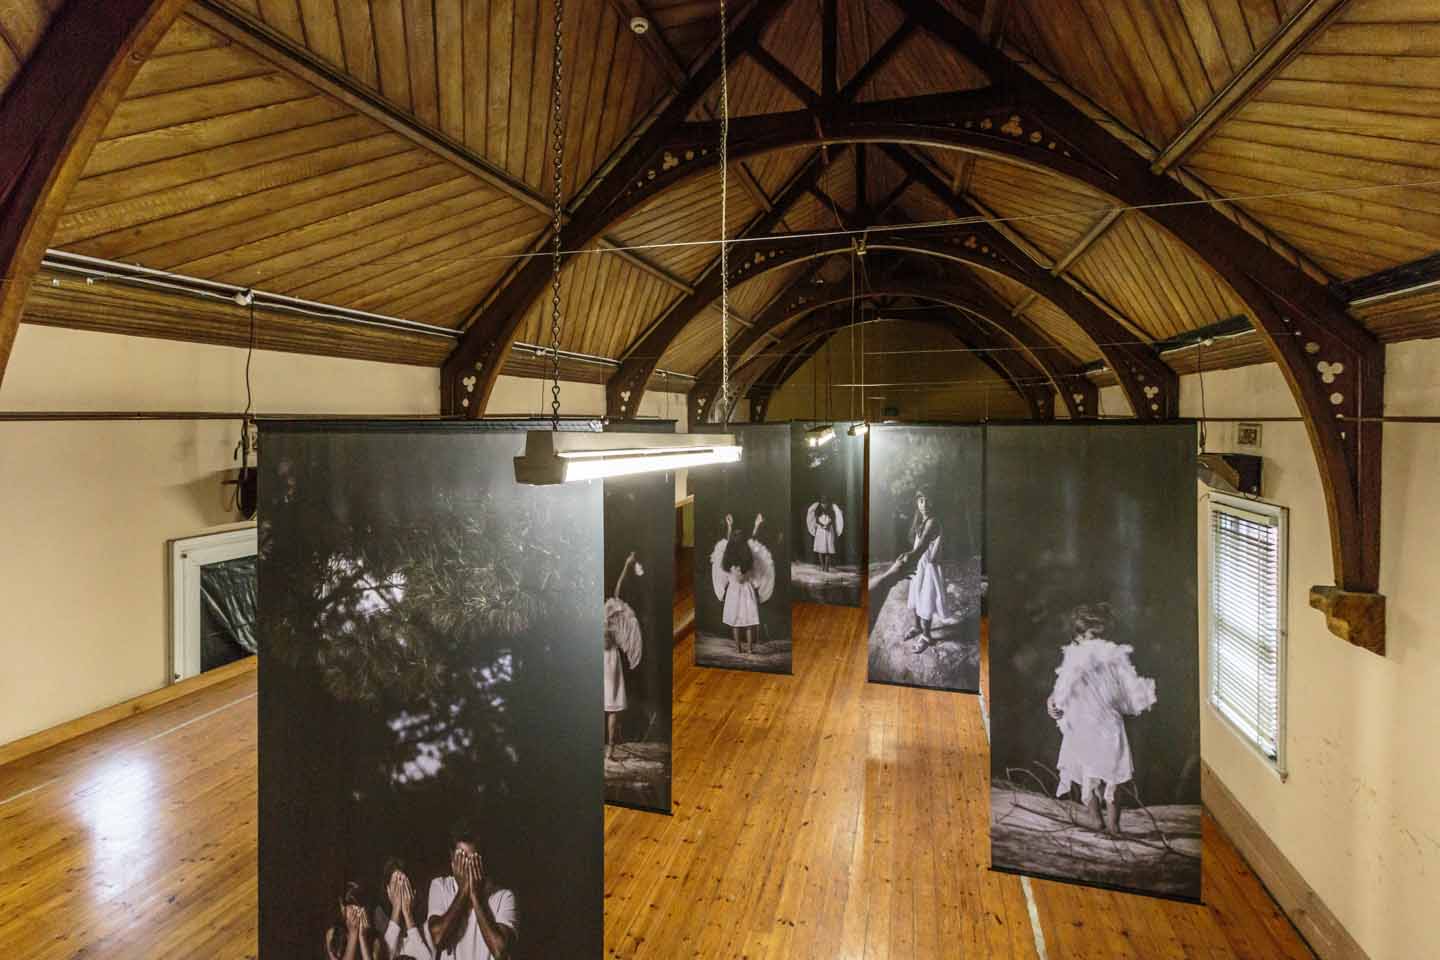 In the process of healing installation Ballarat Convent Foto Biennale Ballarat Convent Aldona Kmiec